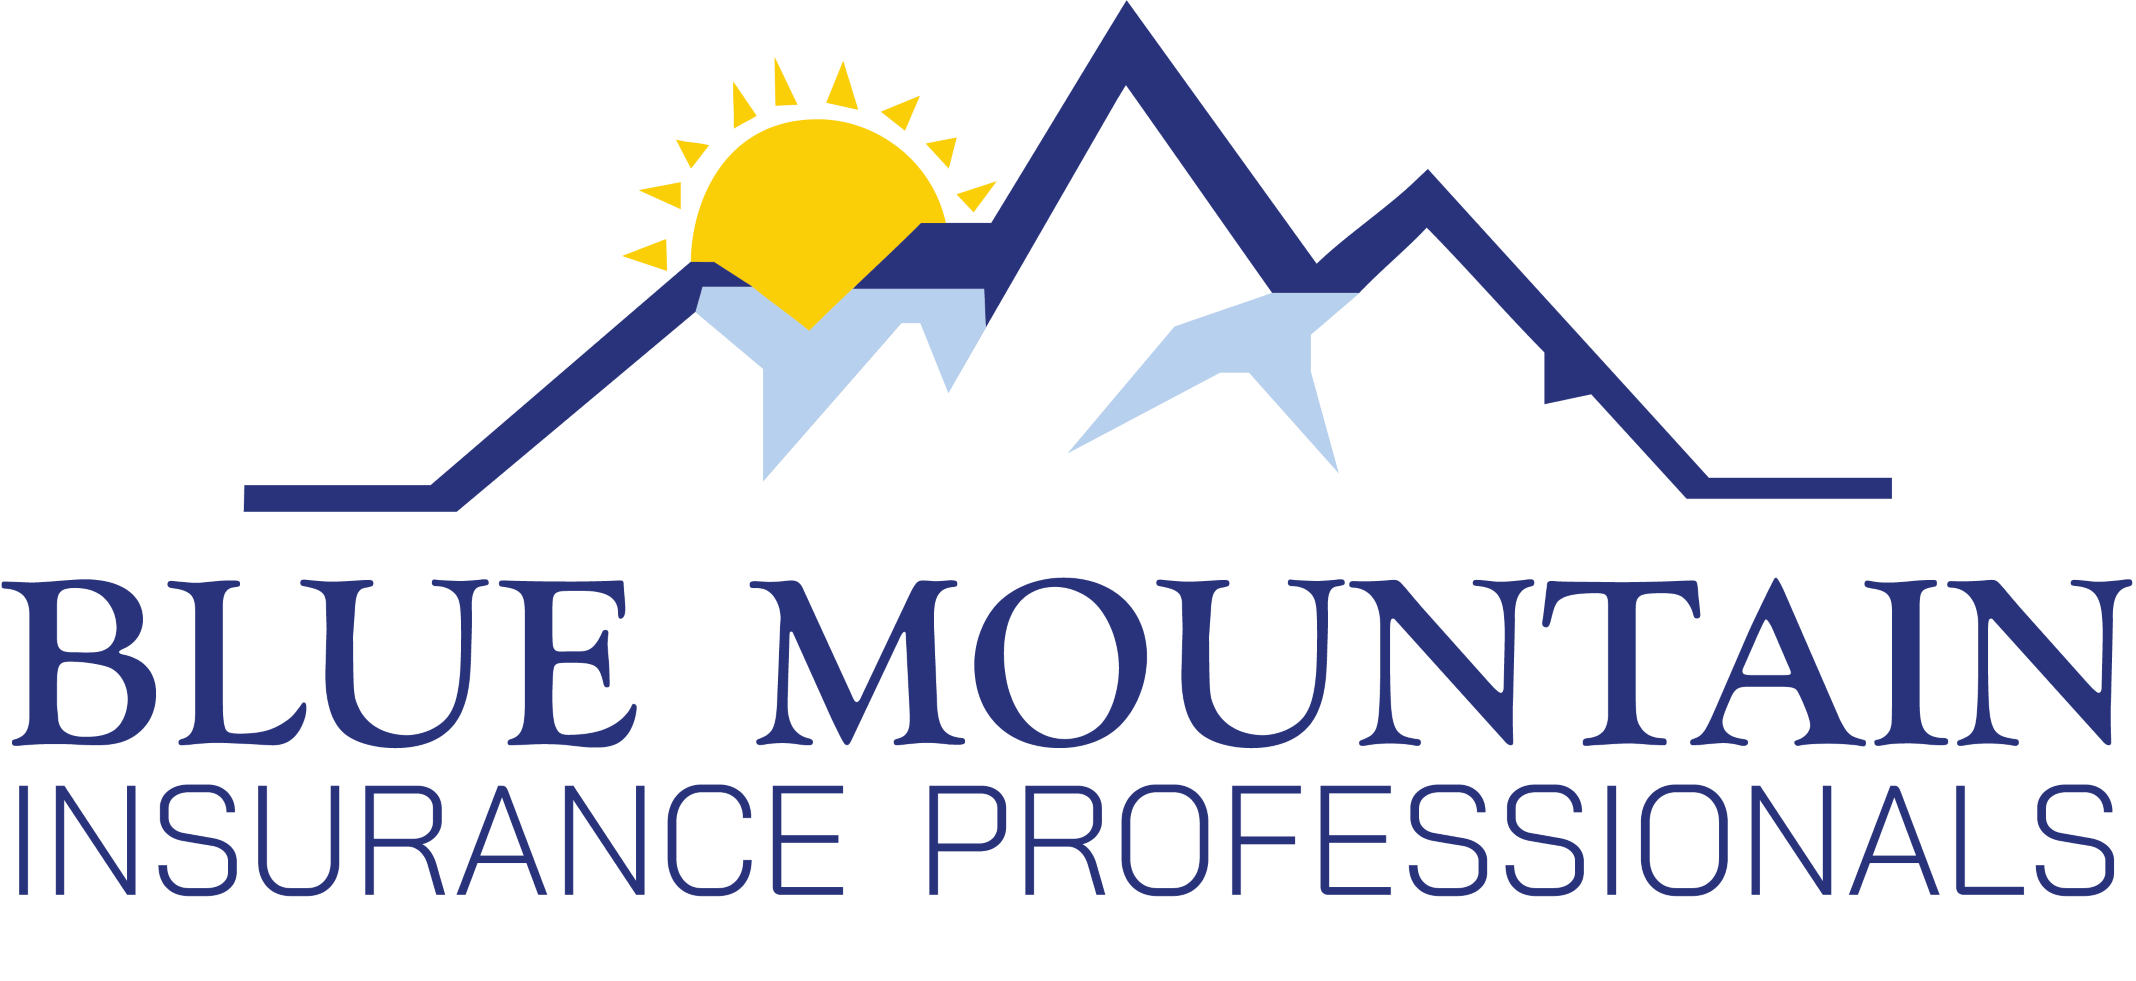  Blue Mountain Insurance Professionals LLC 